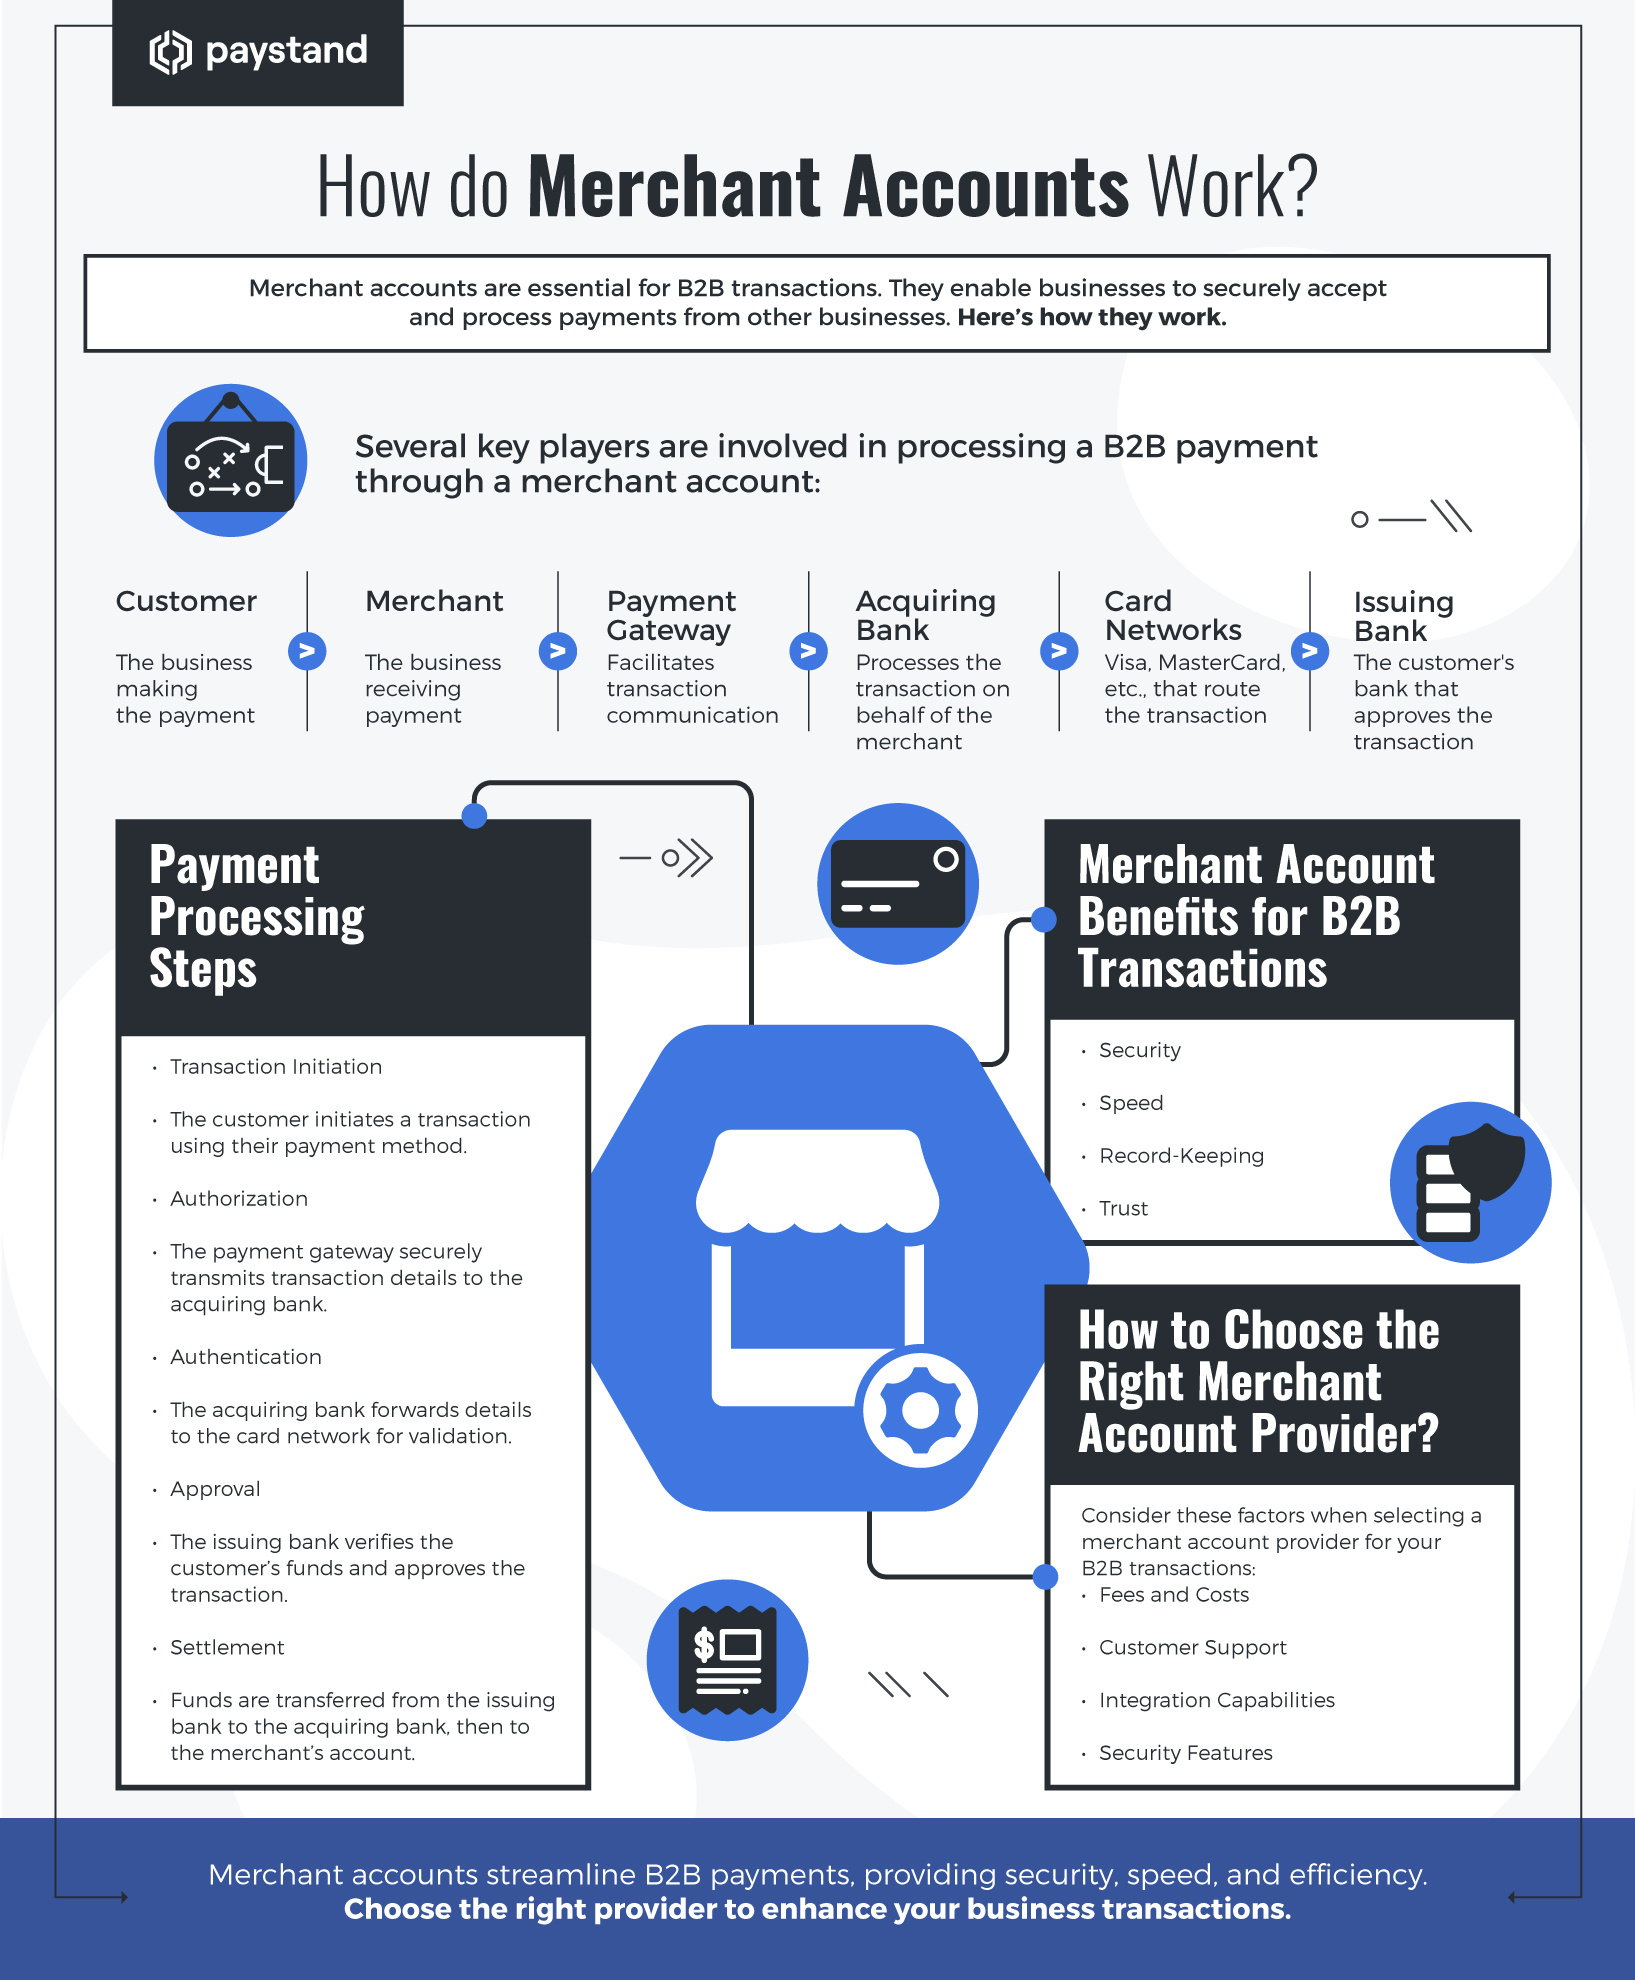 How do merchant accounts work?